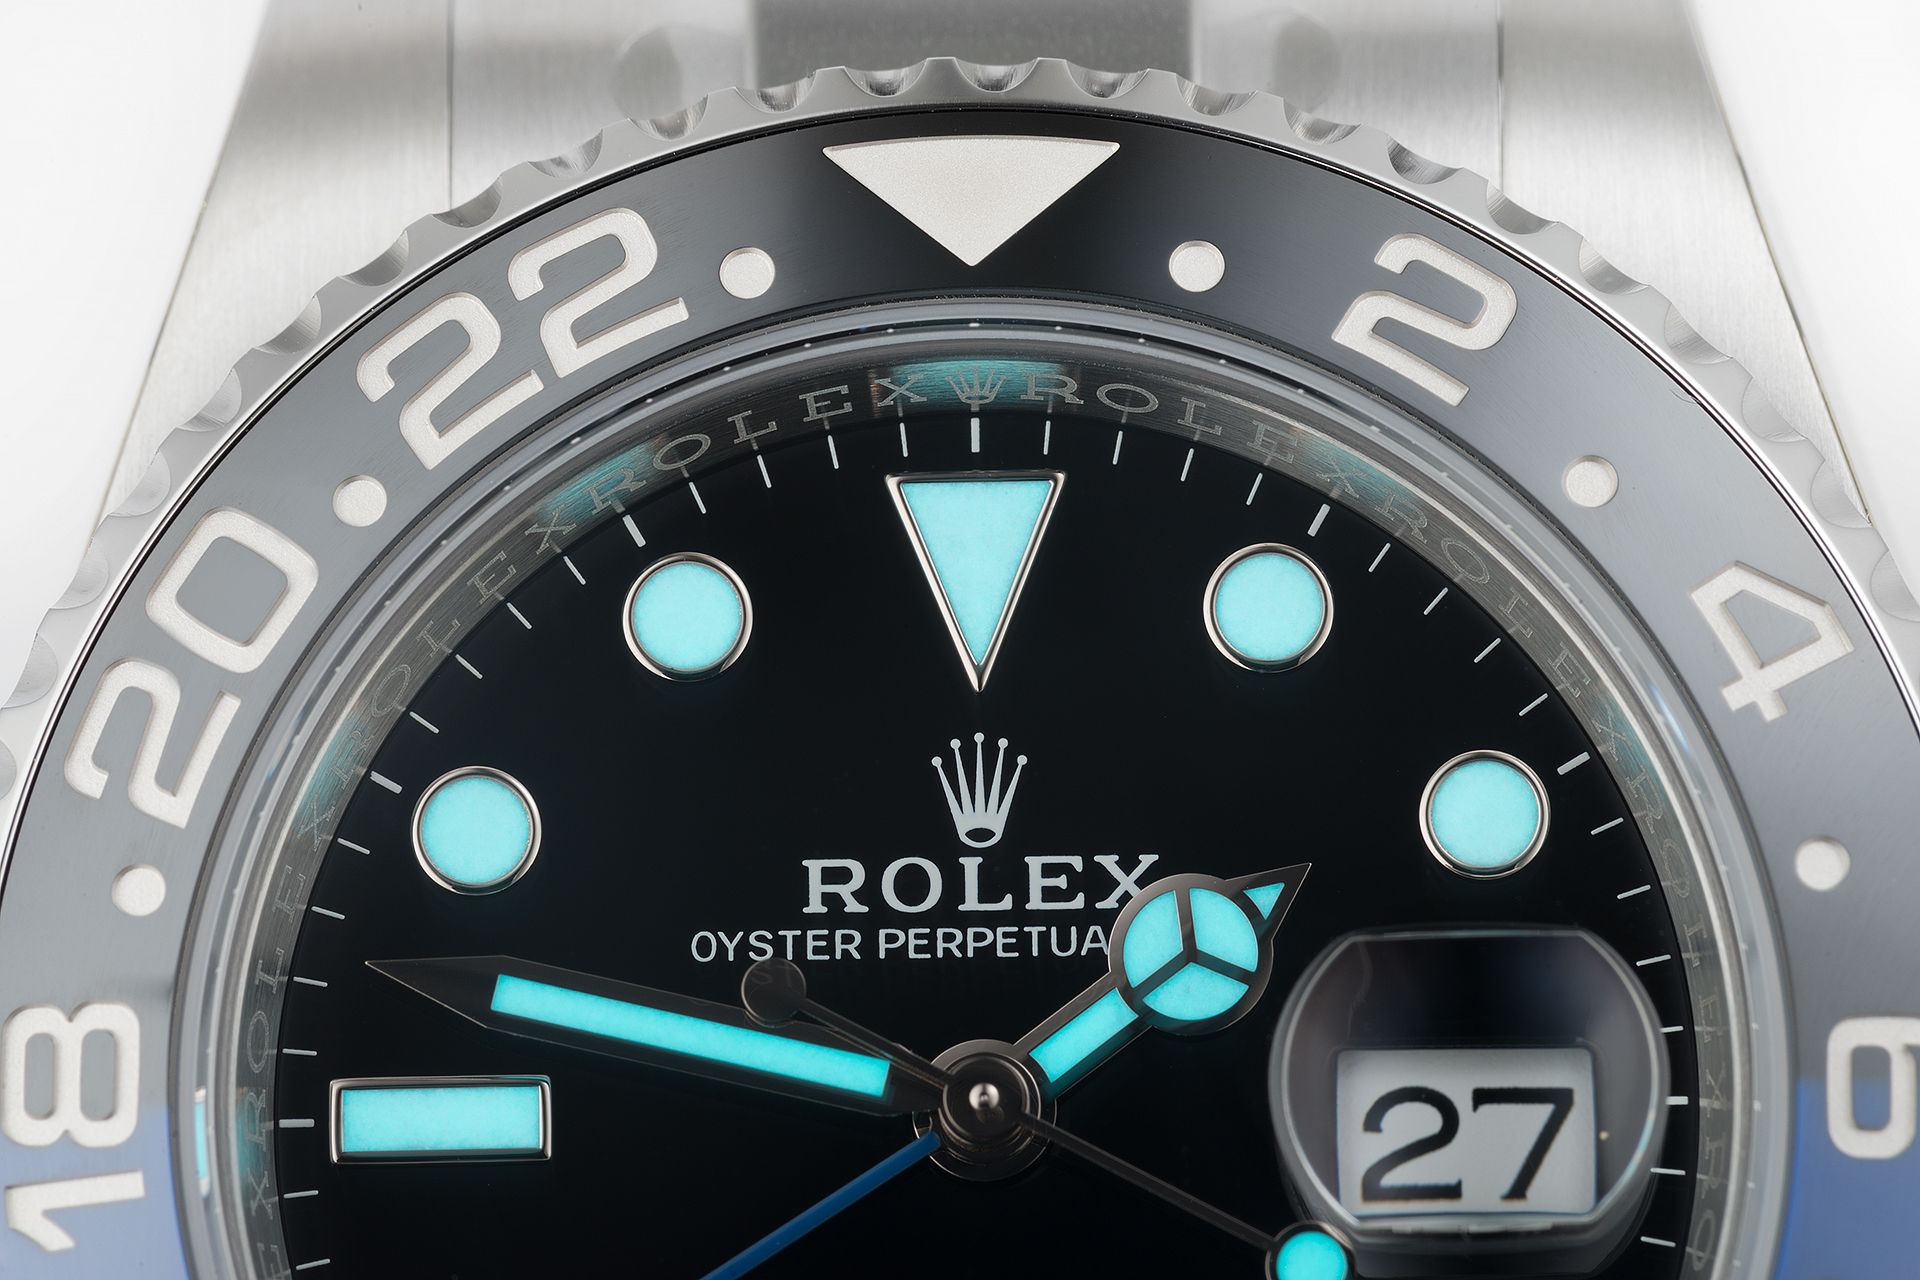 ref 116710BLNR | Brand New '5 Year Warranty' | Rolex GMT-Master II